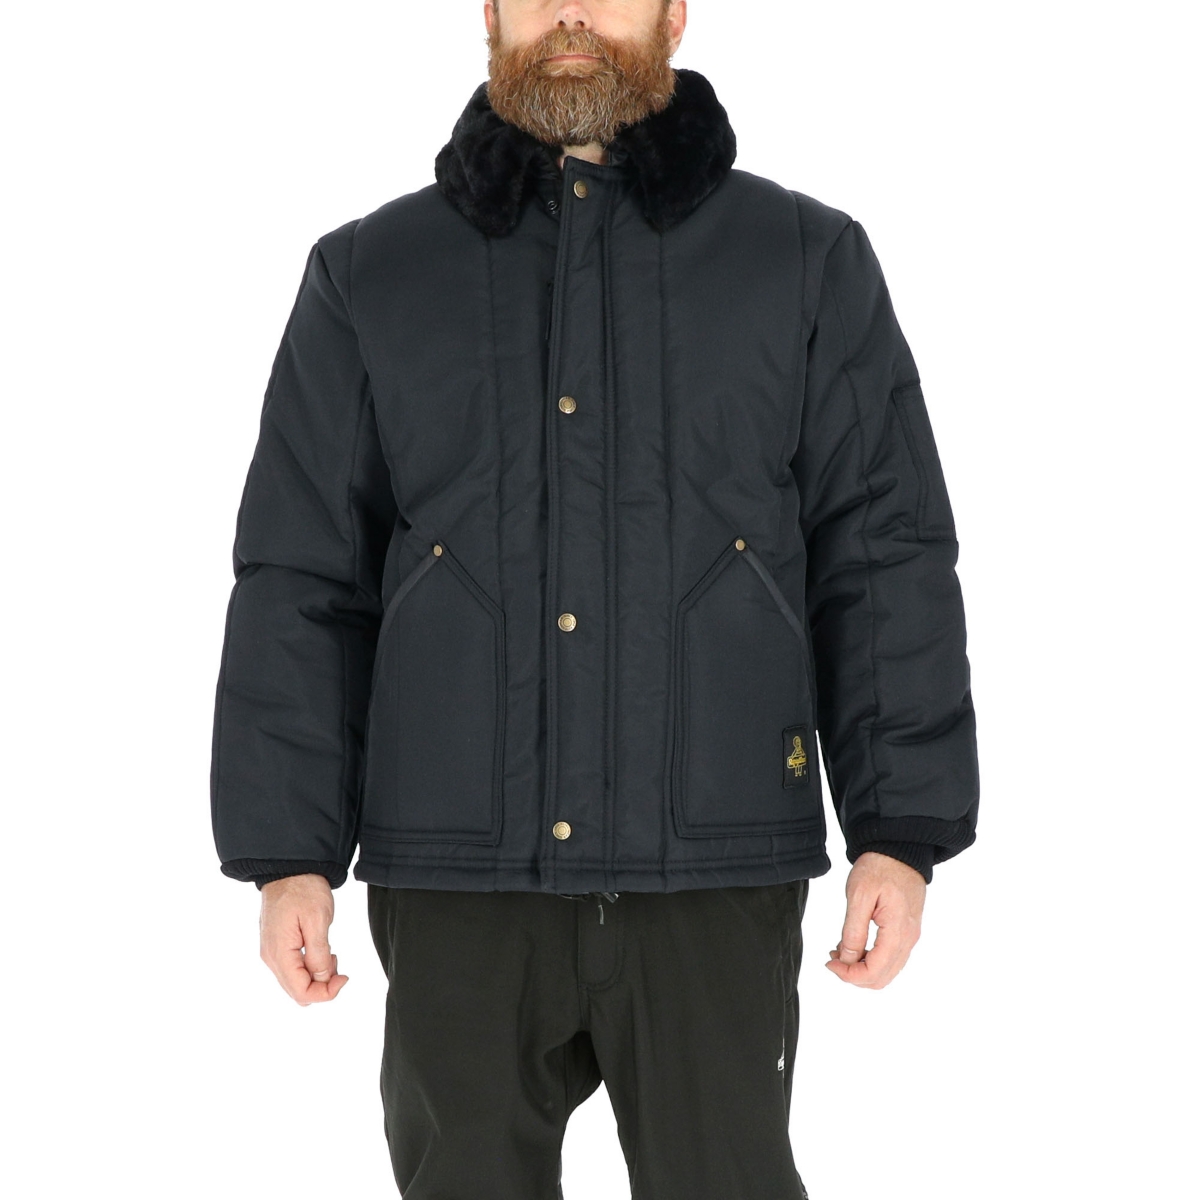 Big & Tall Insulated Iron-Tuff Arctic Jacket with Soft Fleece Collar - Navy